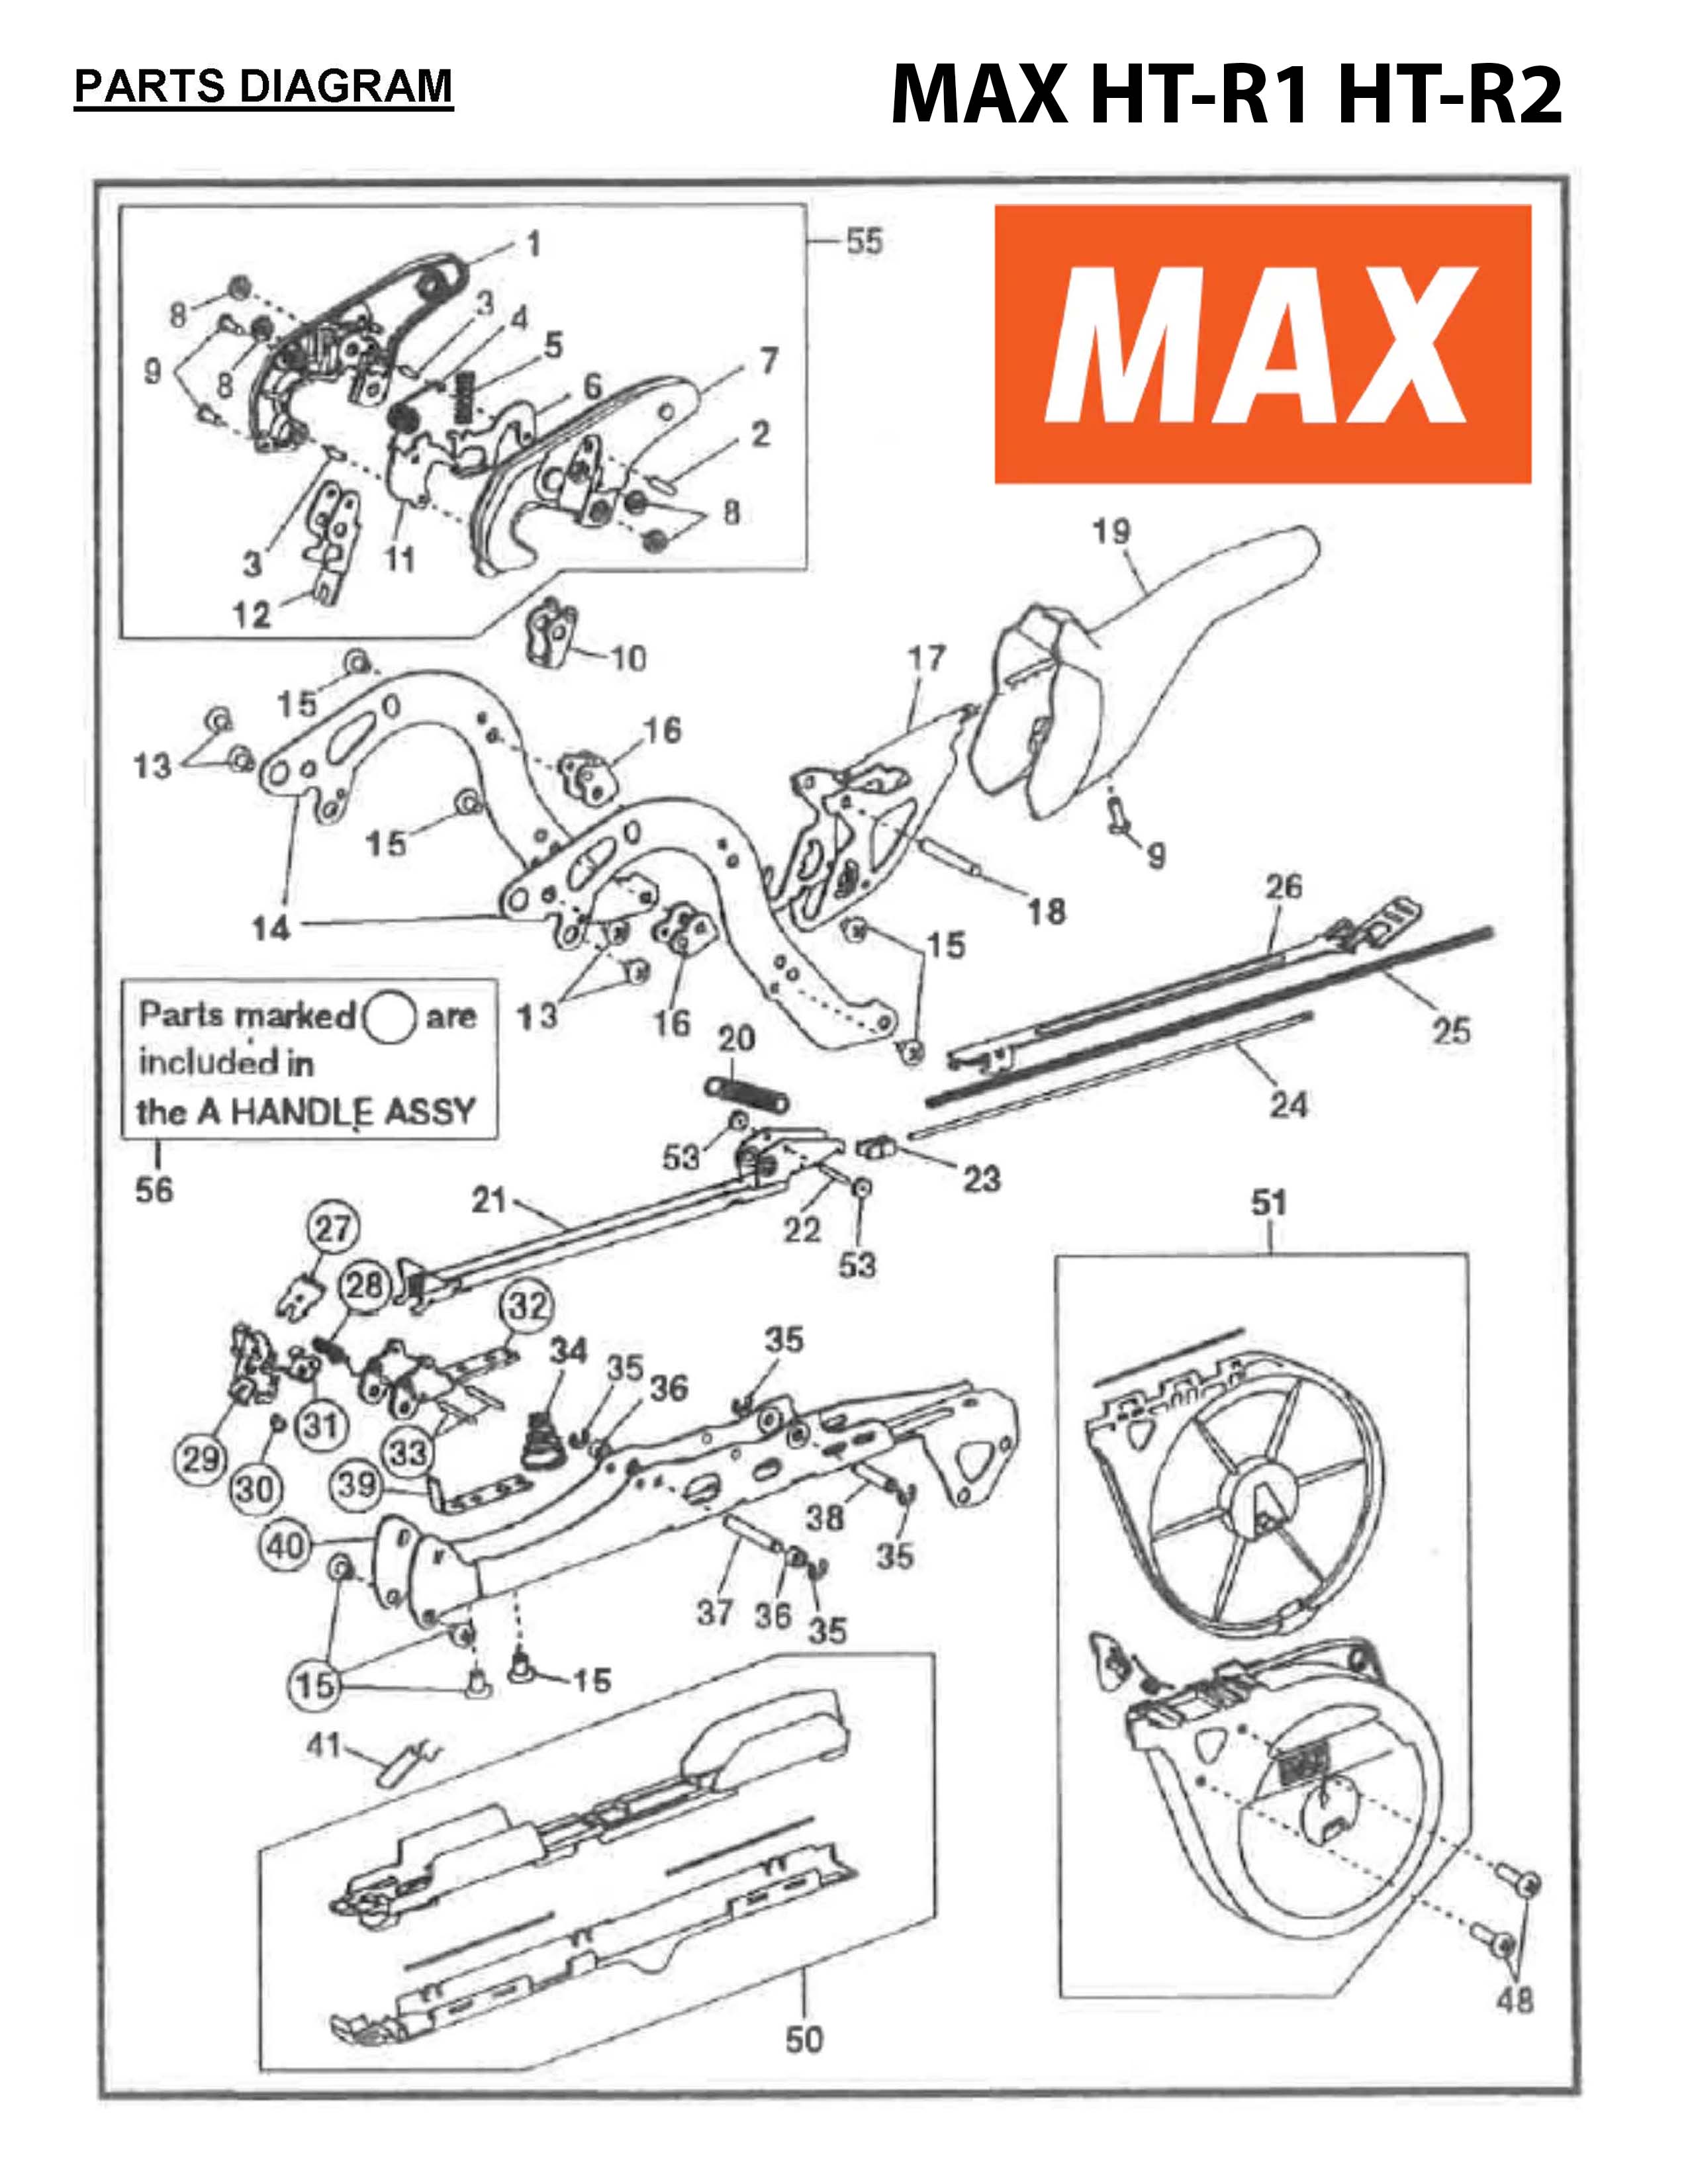 MAX Tapener Part HT11591 A HANDLE Fits MAX HT-R1 HT-R2 #40